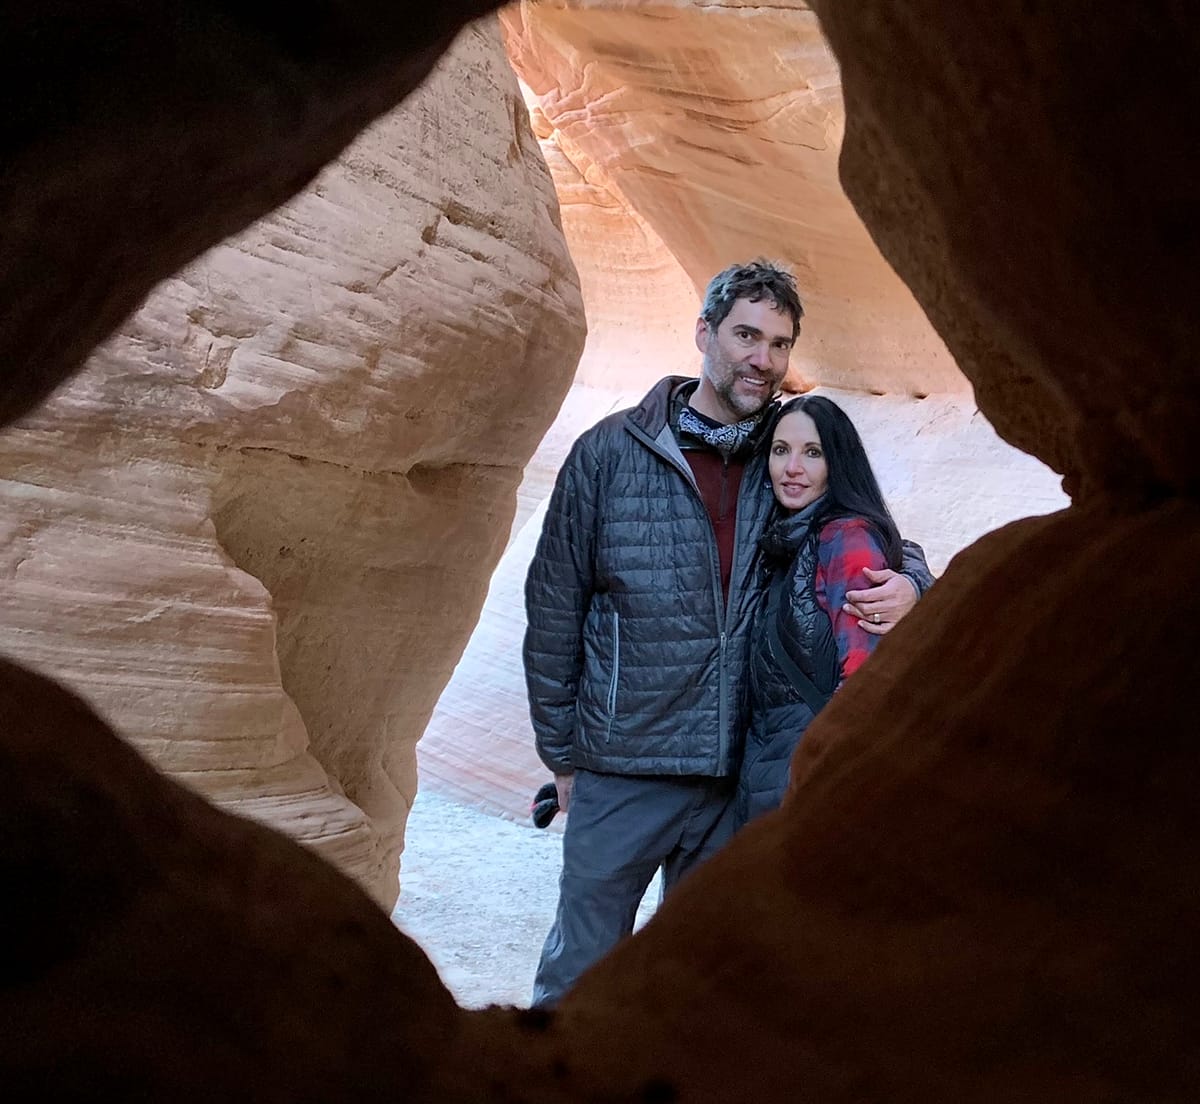 Looking through a sandstone window in Kanab Utah's Peek-A-Boo Slot Canyon